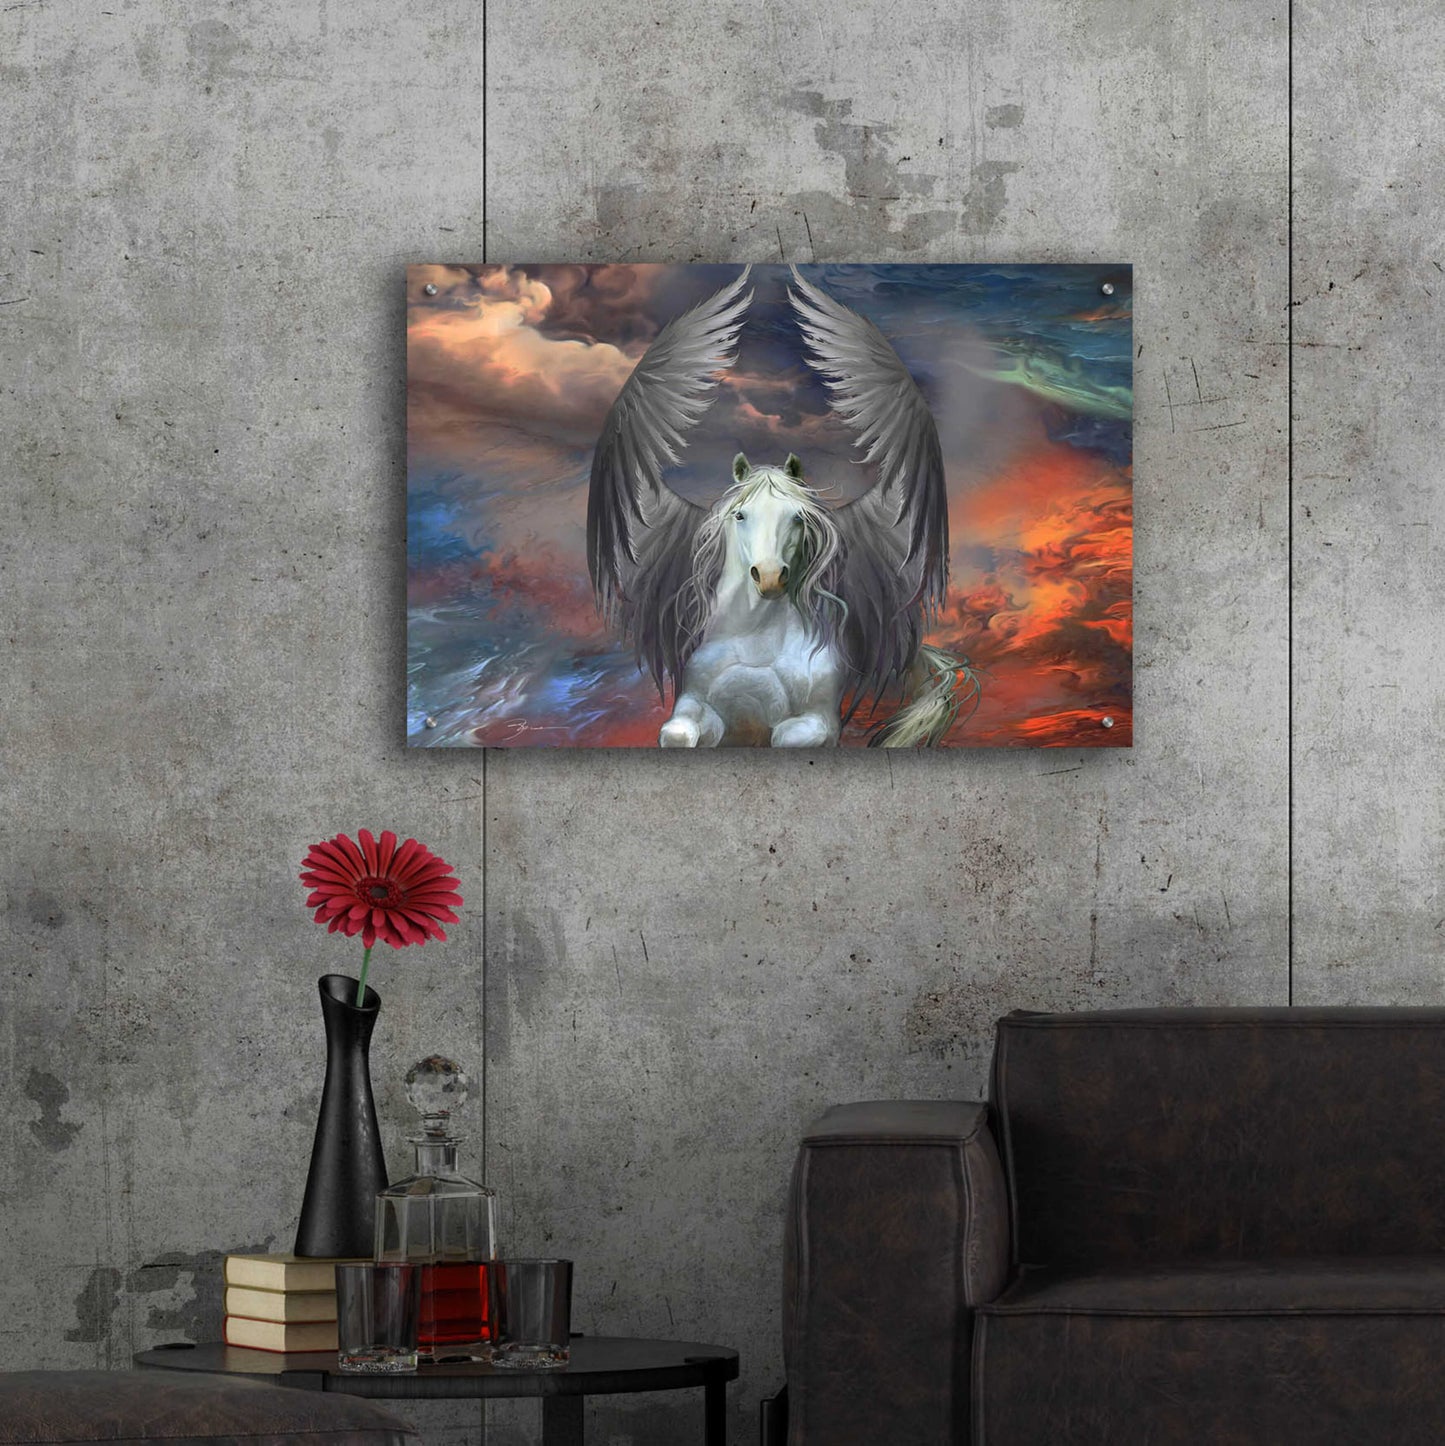 Epic Art 'Unicorn Magic' by Enright, Acrylic Glass Wall Art,36x24